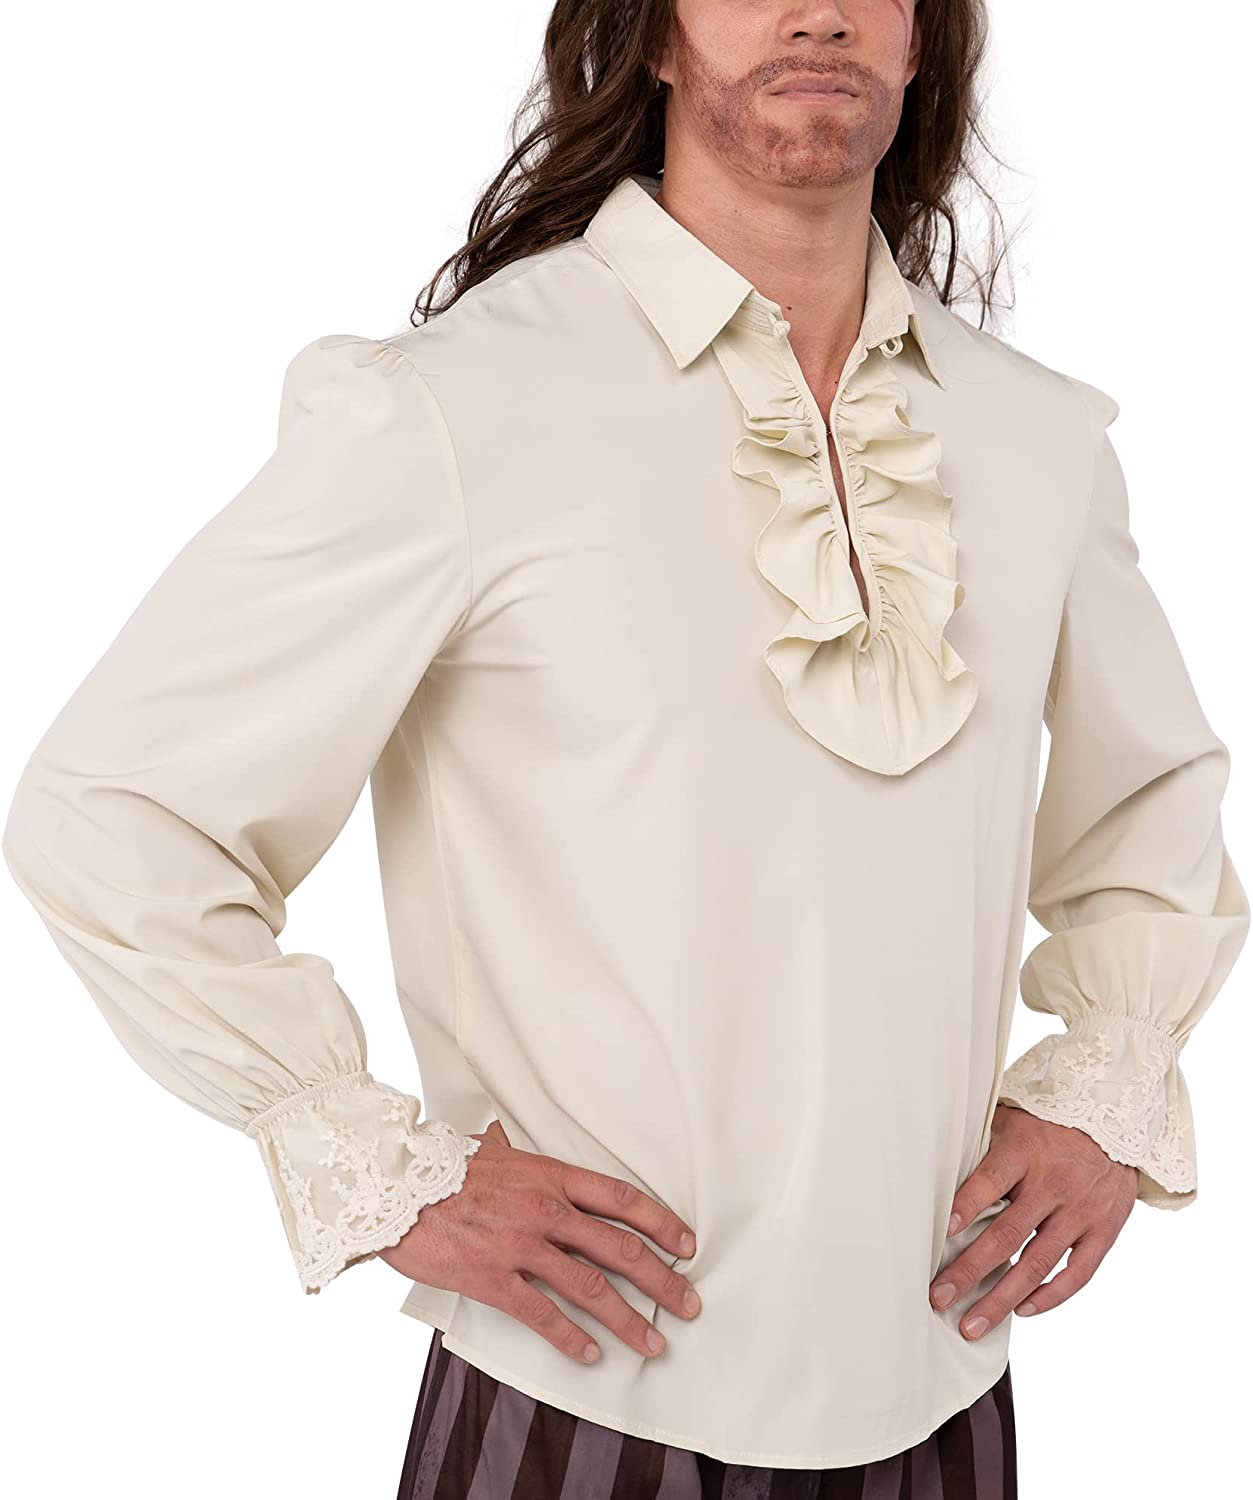 Men's White Pirate Shirt